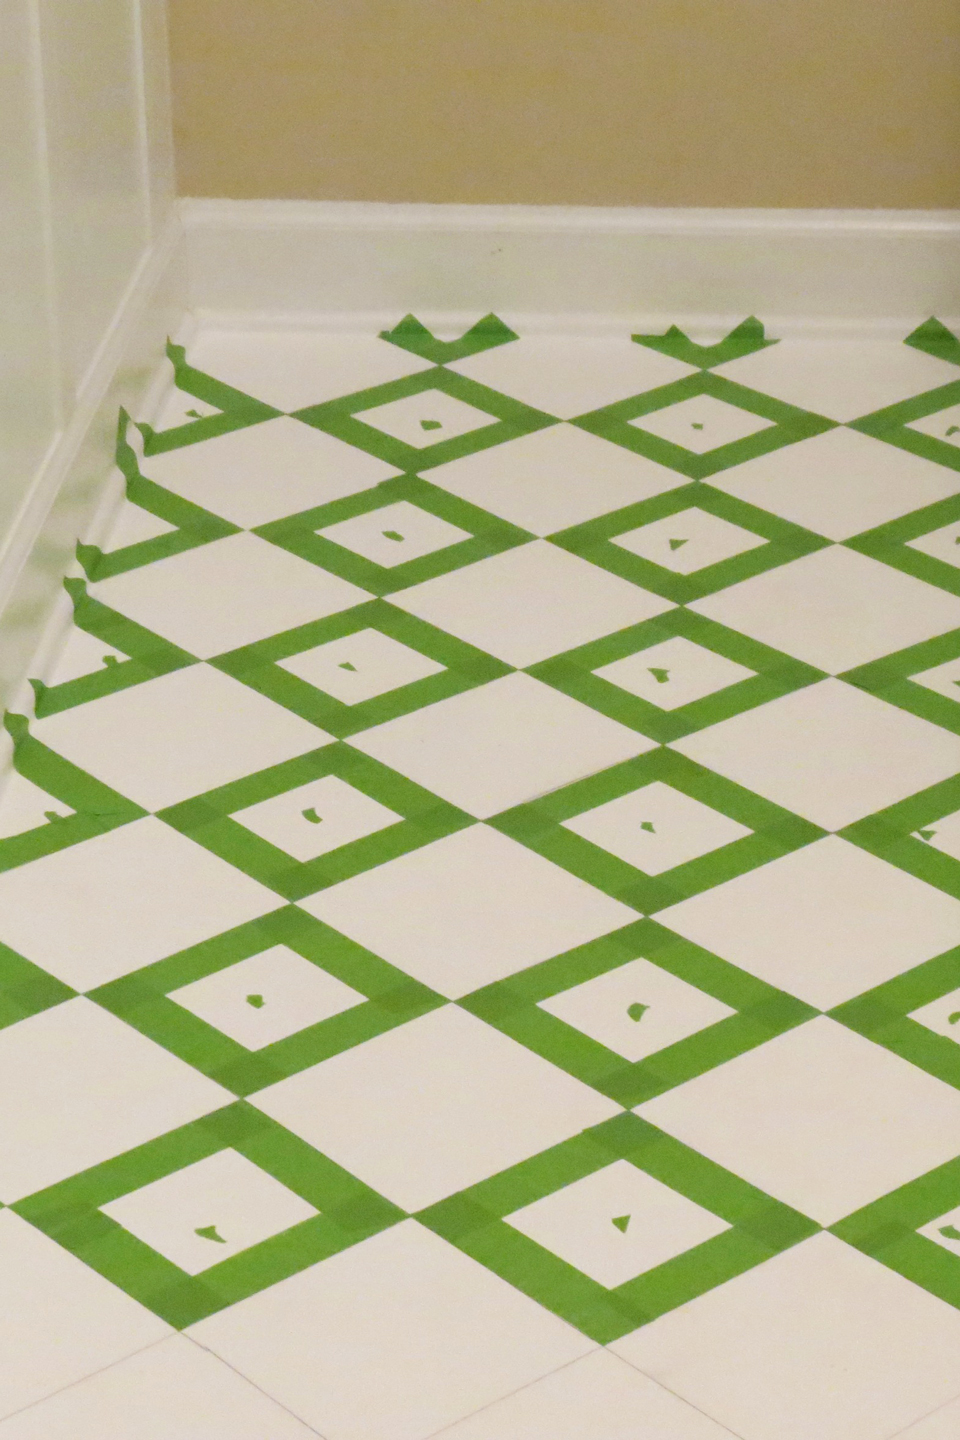 Painters tape creates checkerboard pattern on floors